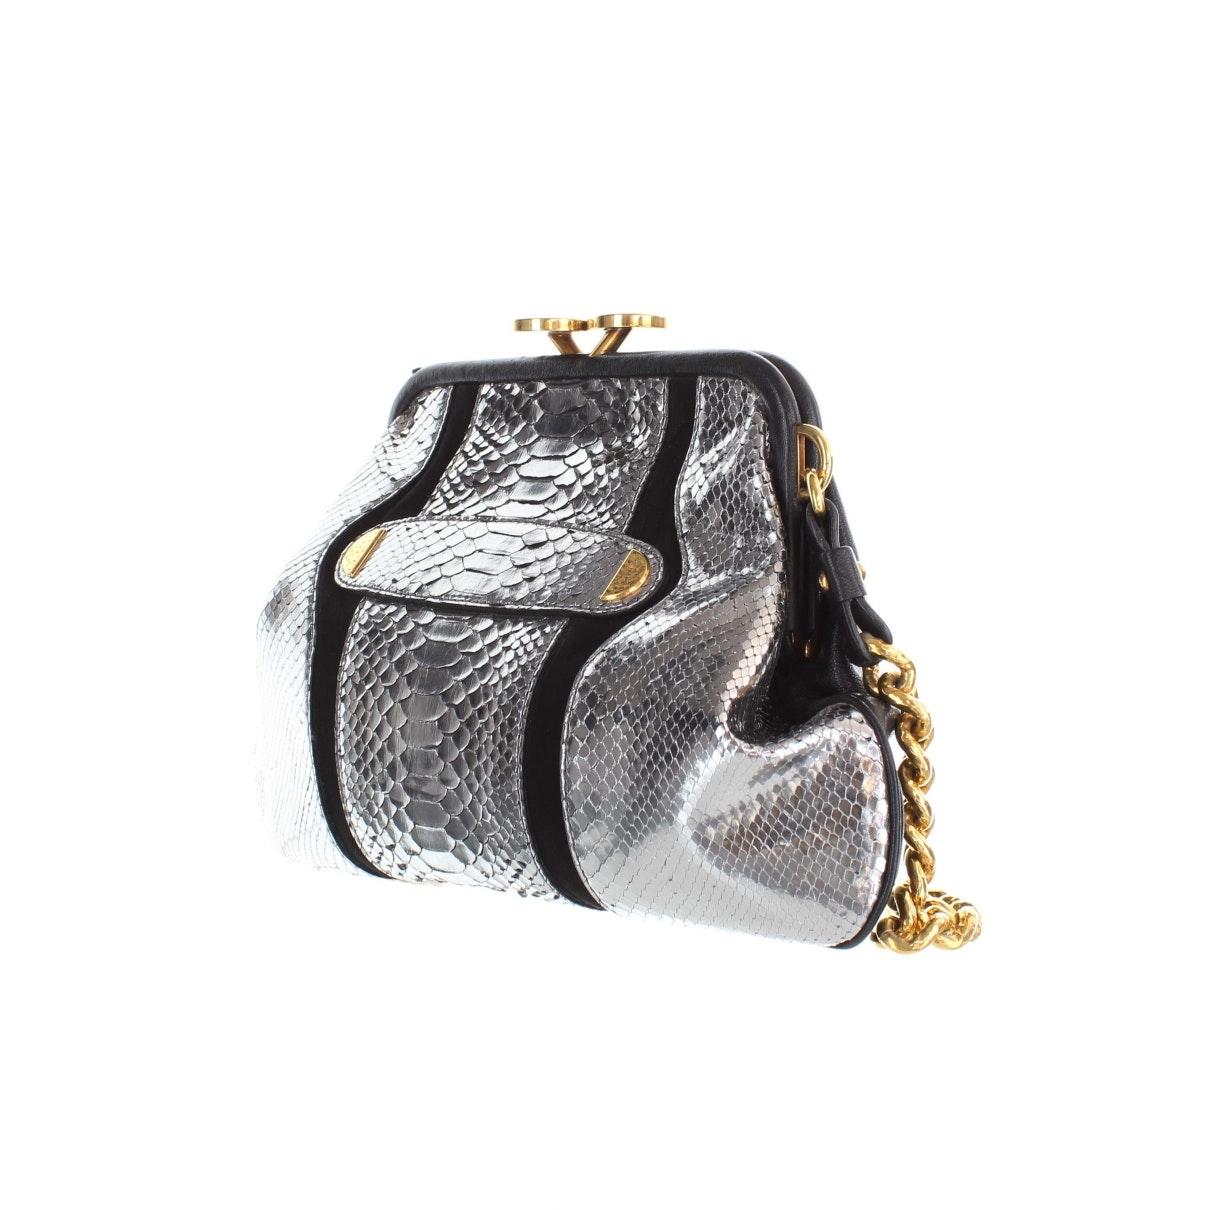 Marc Jacobs Silver Leather Handbag in Metallic - Lyst